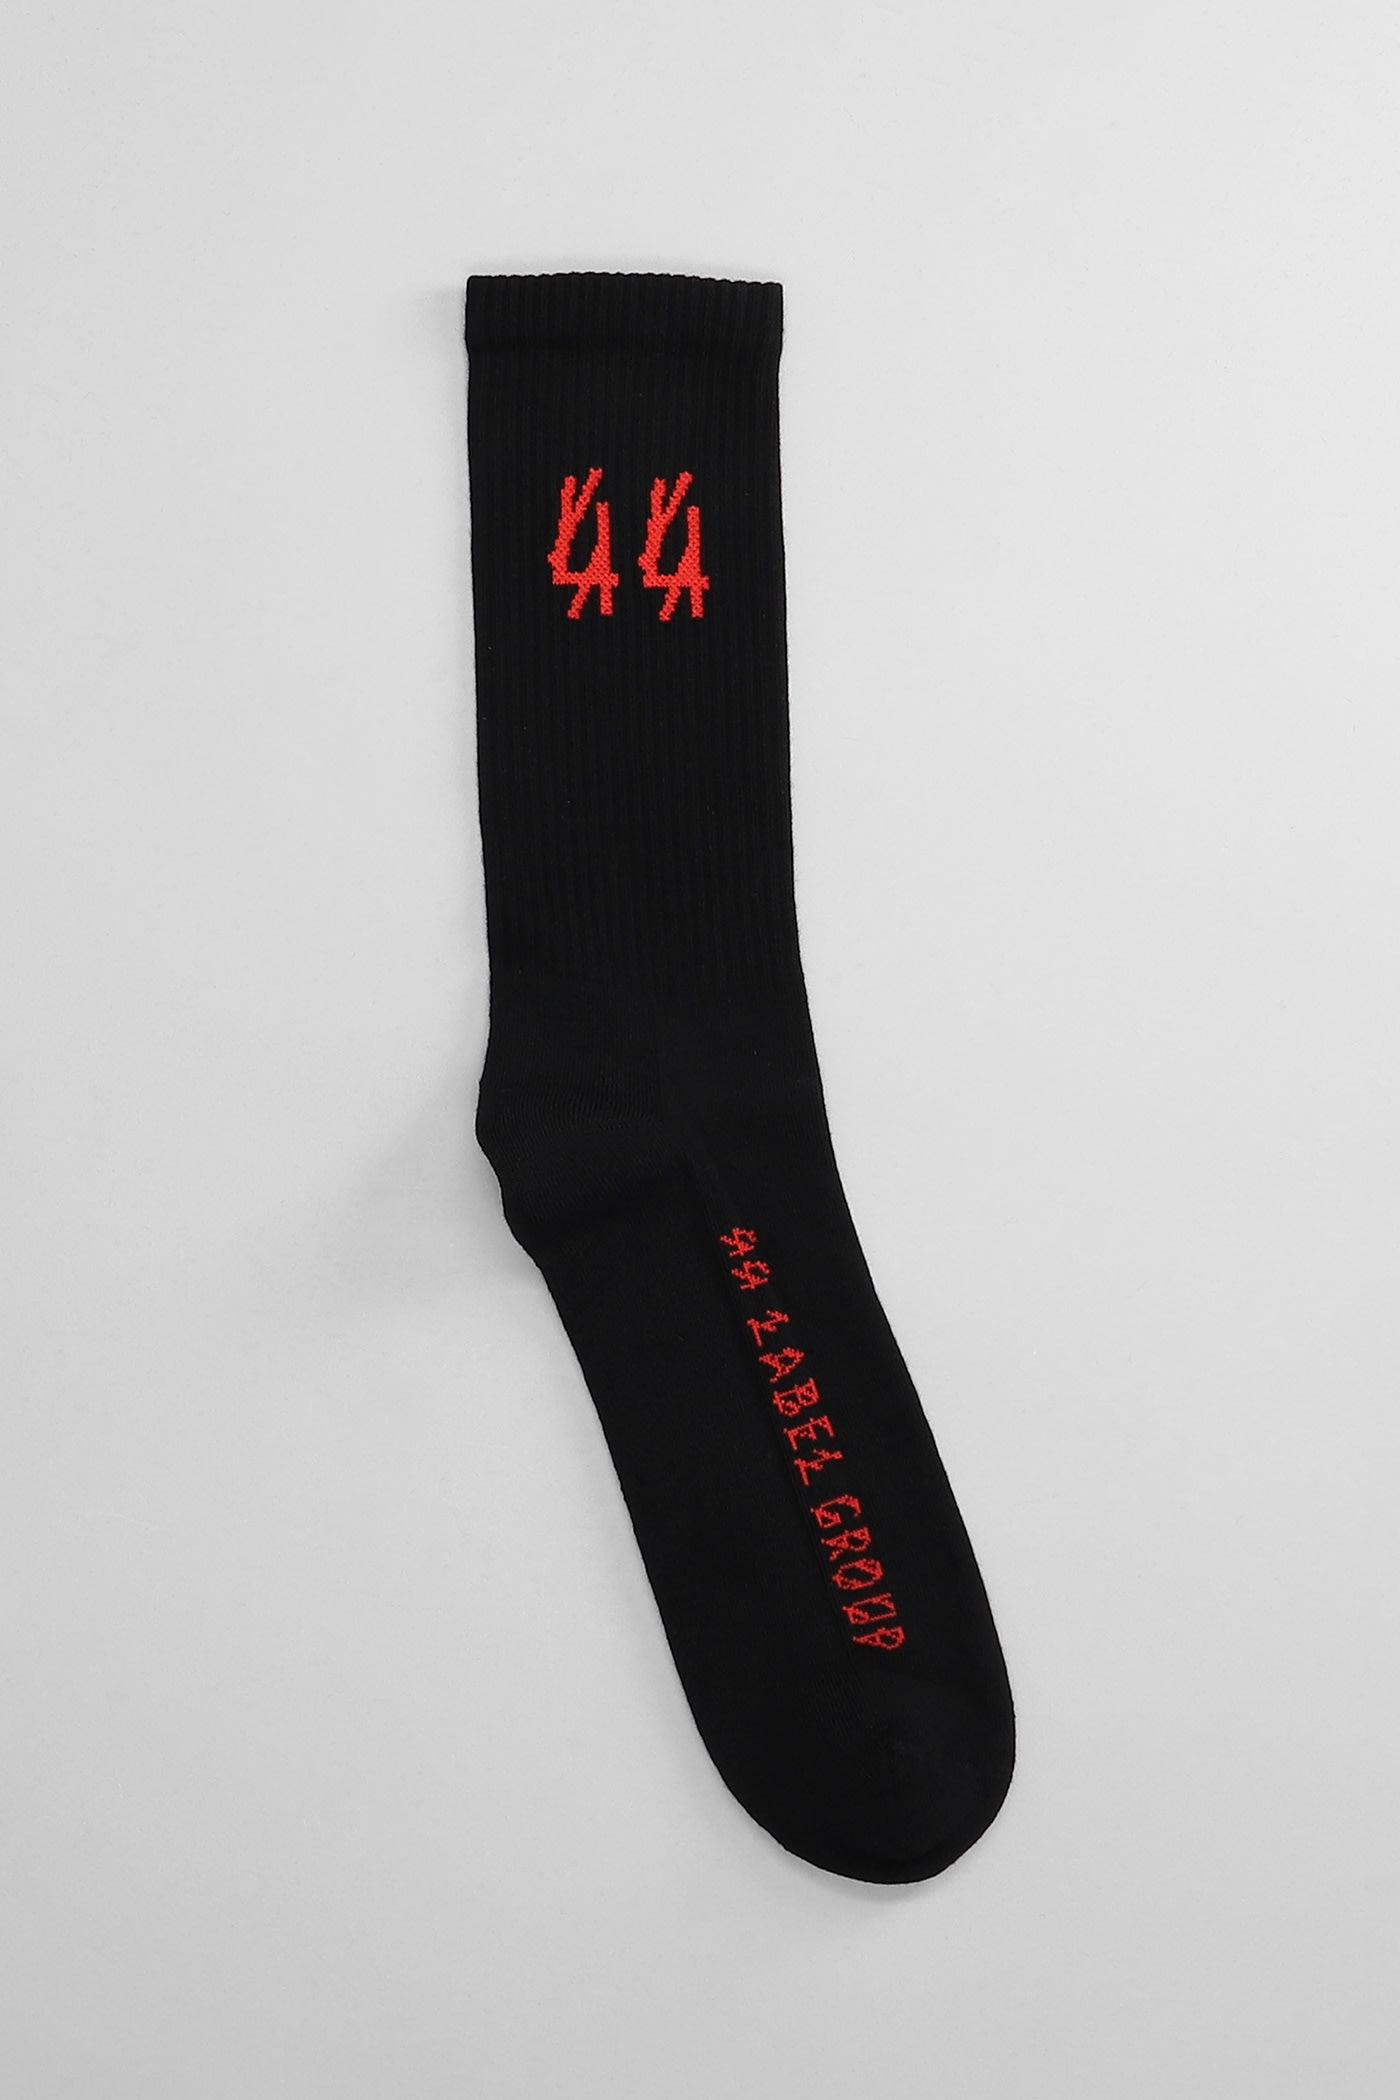 Shop 44 Label Group Socks In Black Cotton